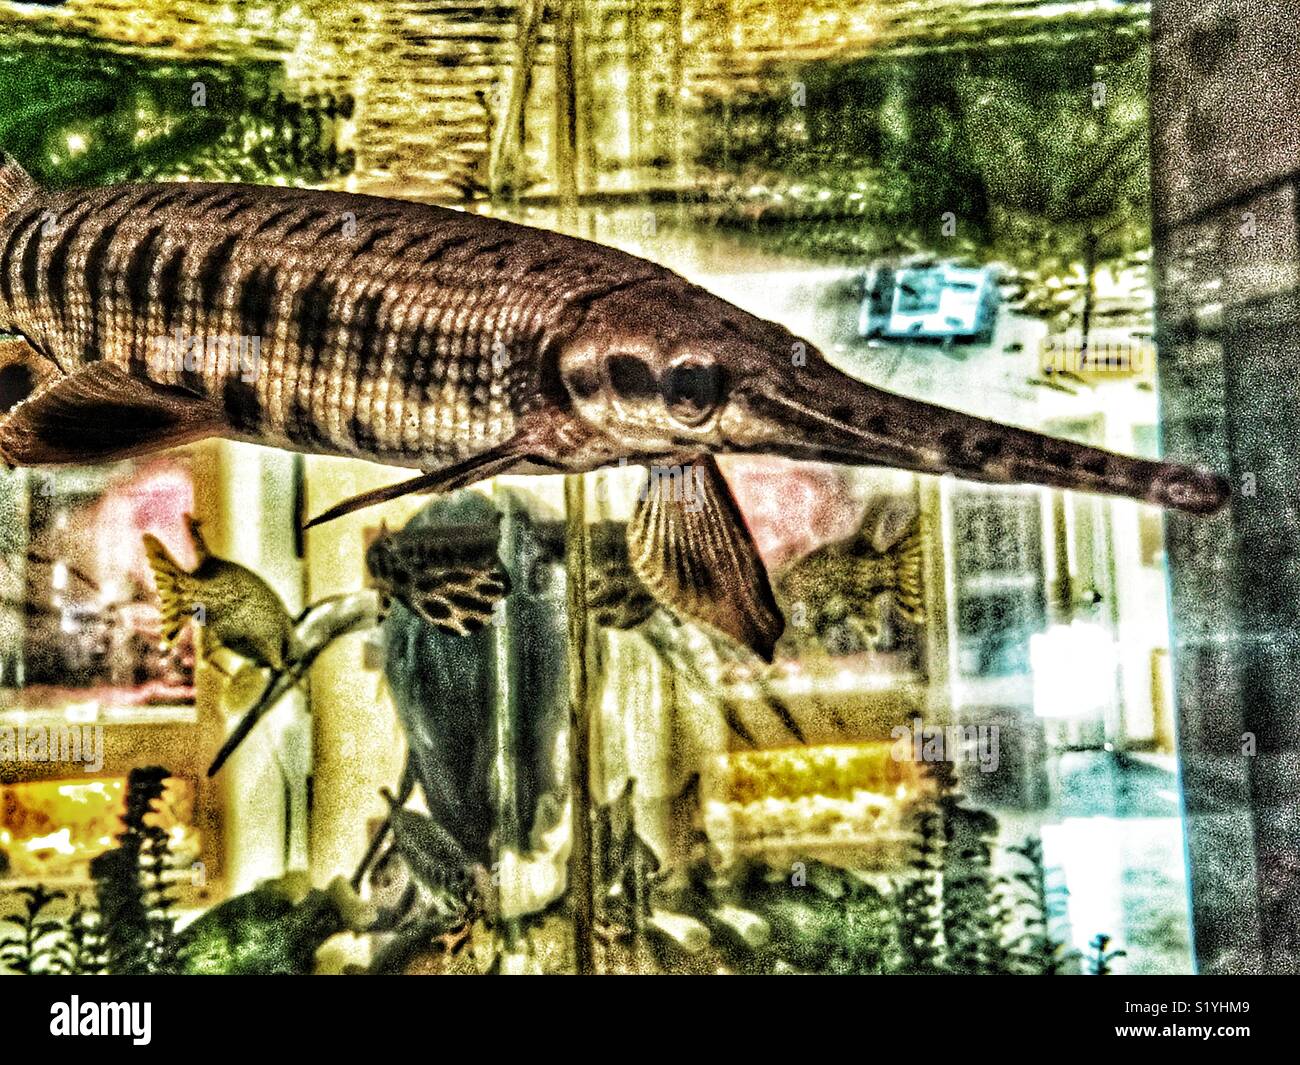 Portrait of Longnose gar swimming in aquarium (Lepisosteus osseus aka needlenose gar) Stock Photo